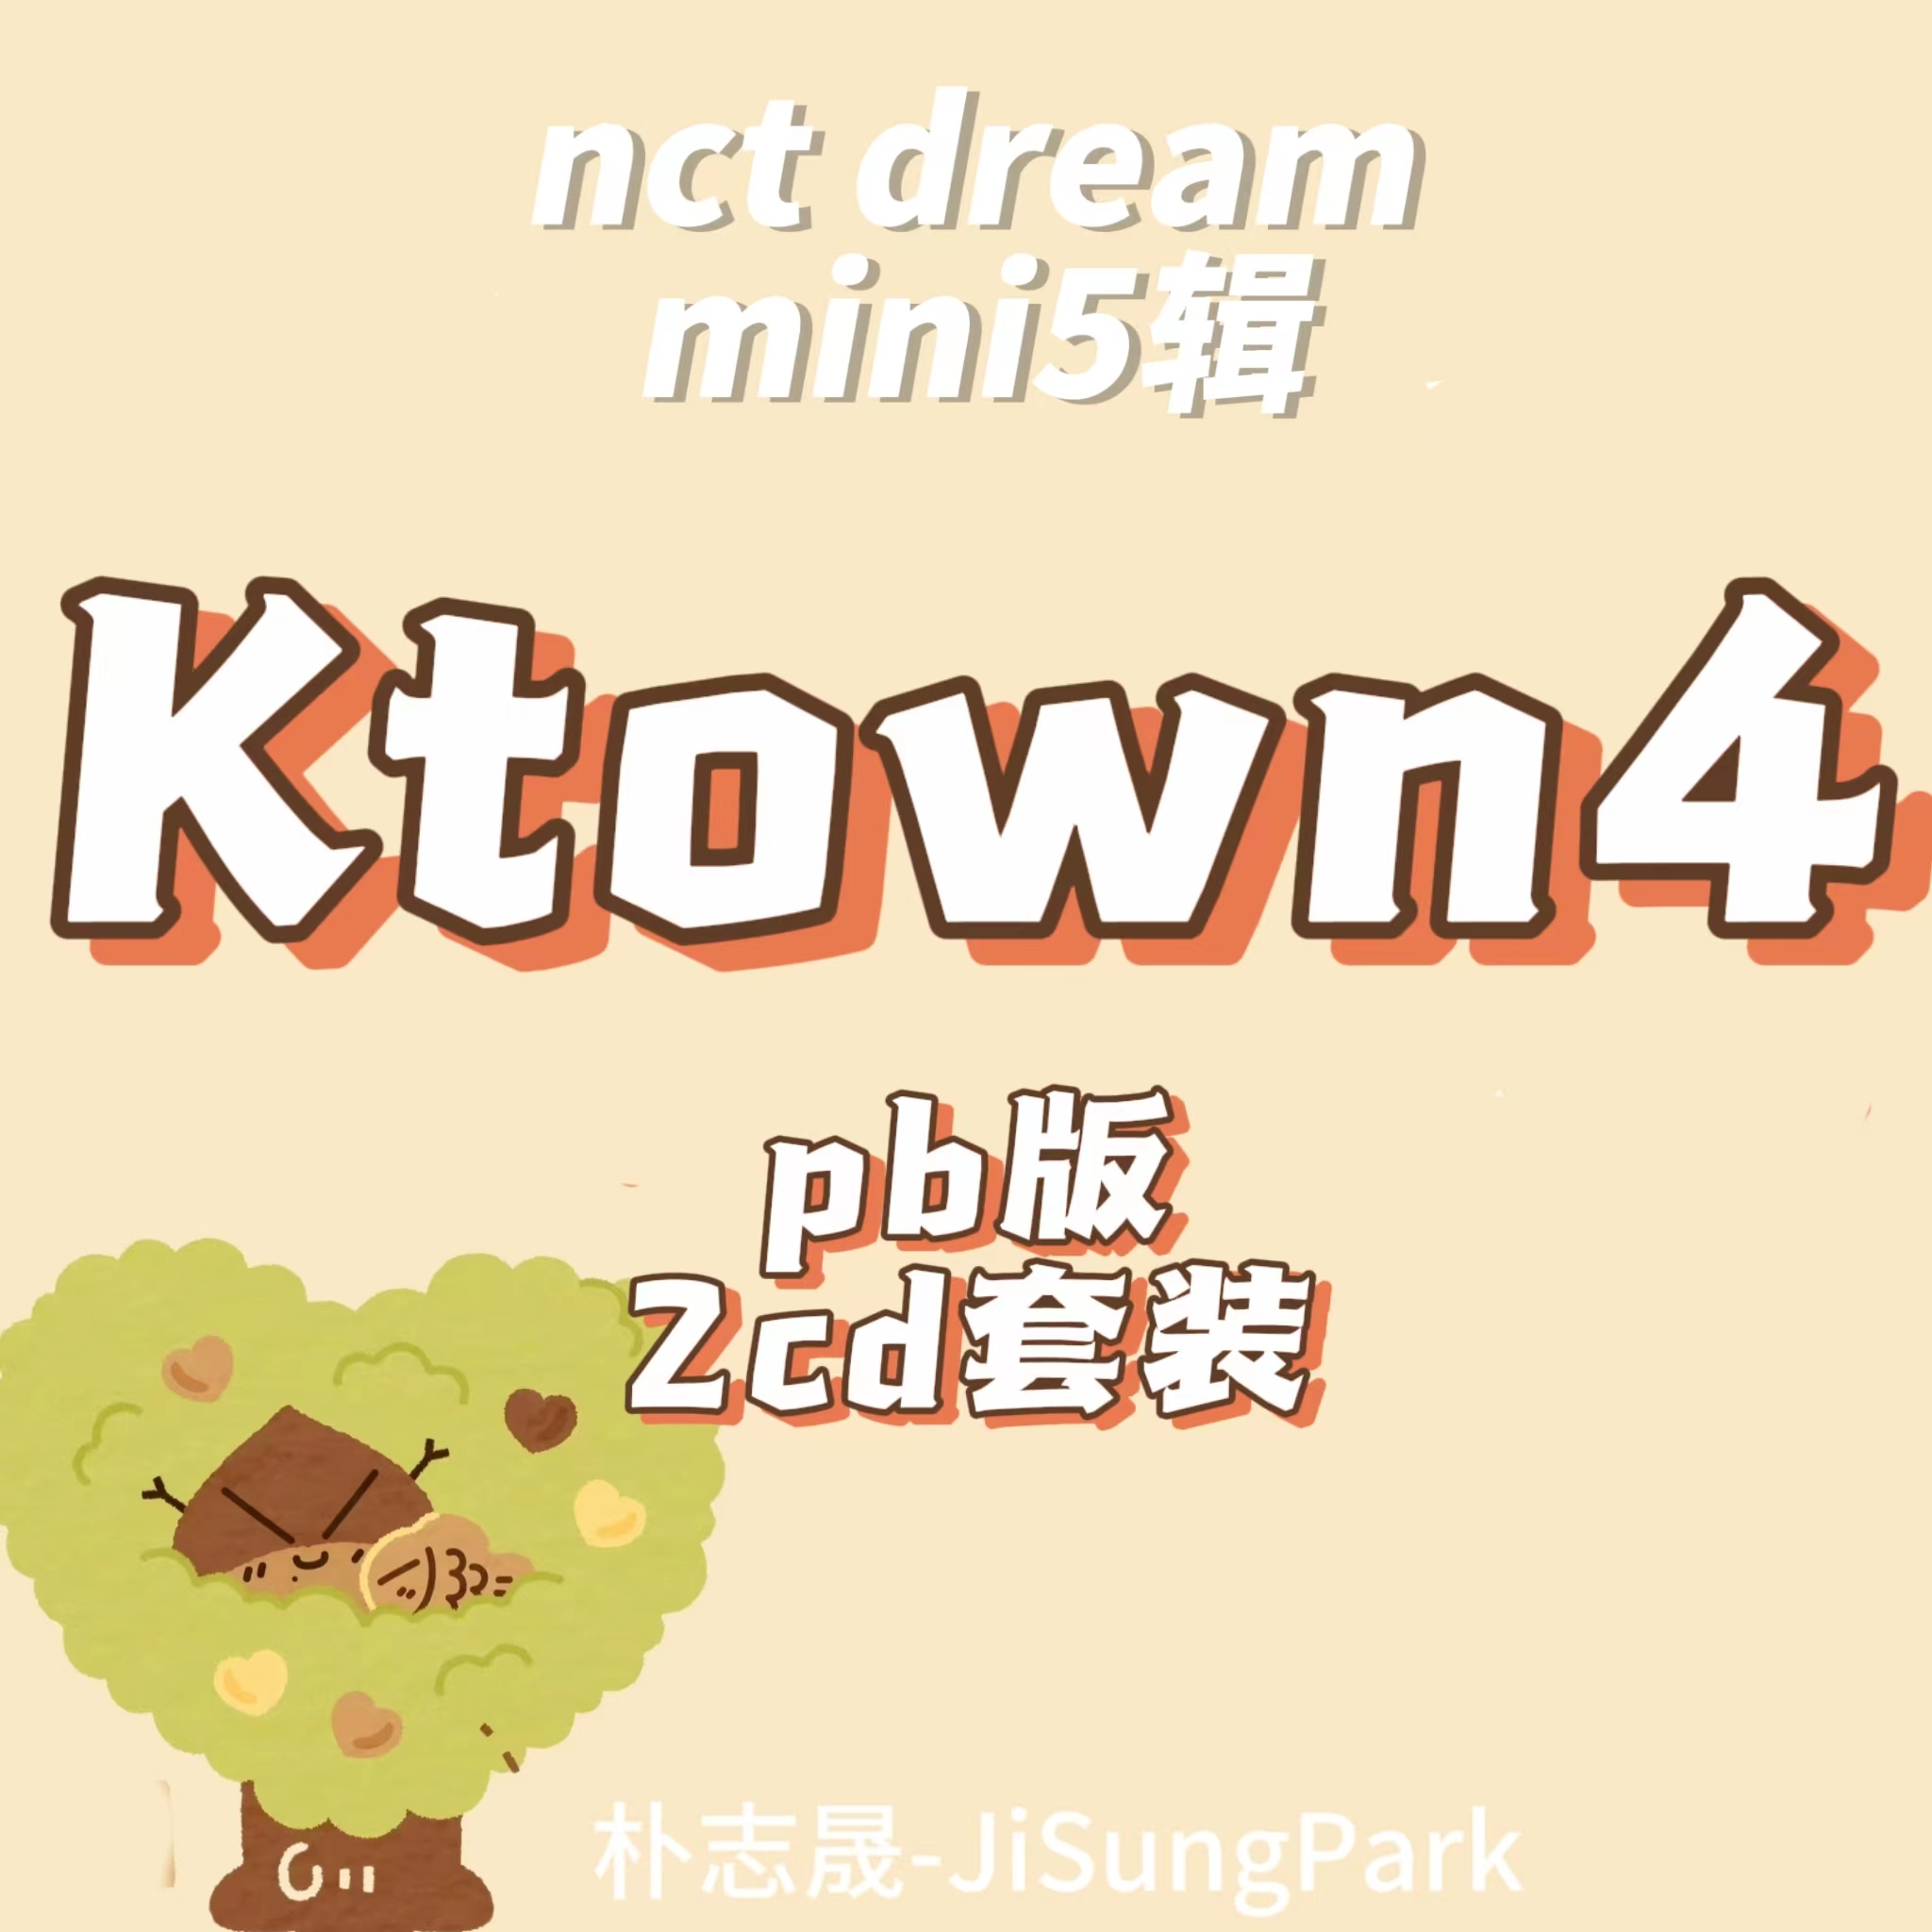 [全款 裸专] [2CD 套装] NCT DREAM - [DREAM( )SCAPE] (Photobook Ver.)_朴志晟吧_ParkJiSungBar